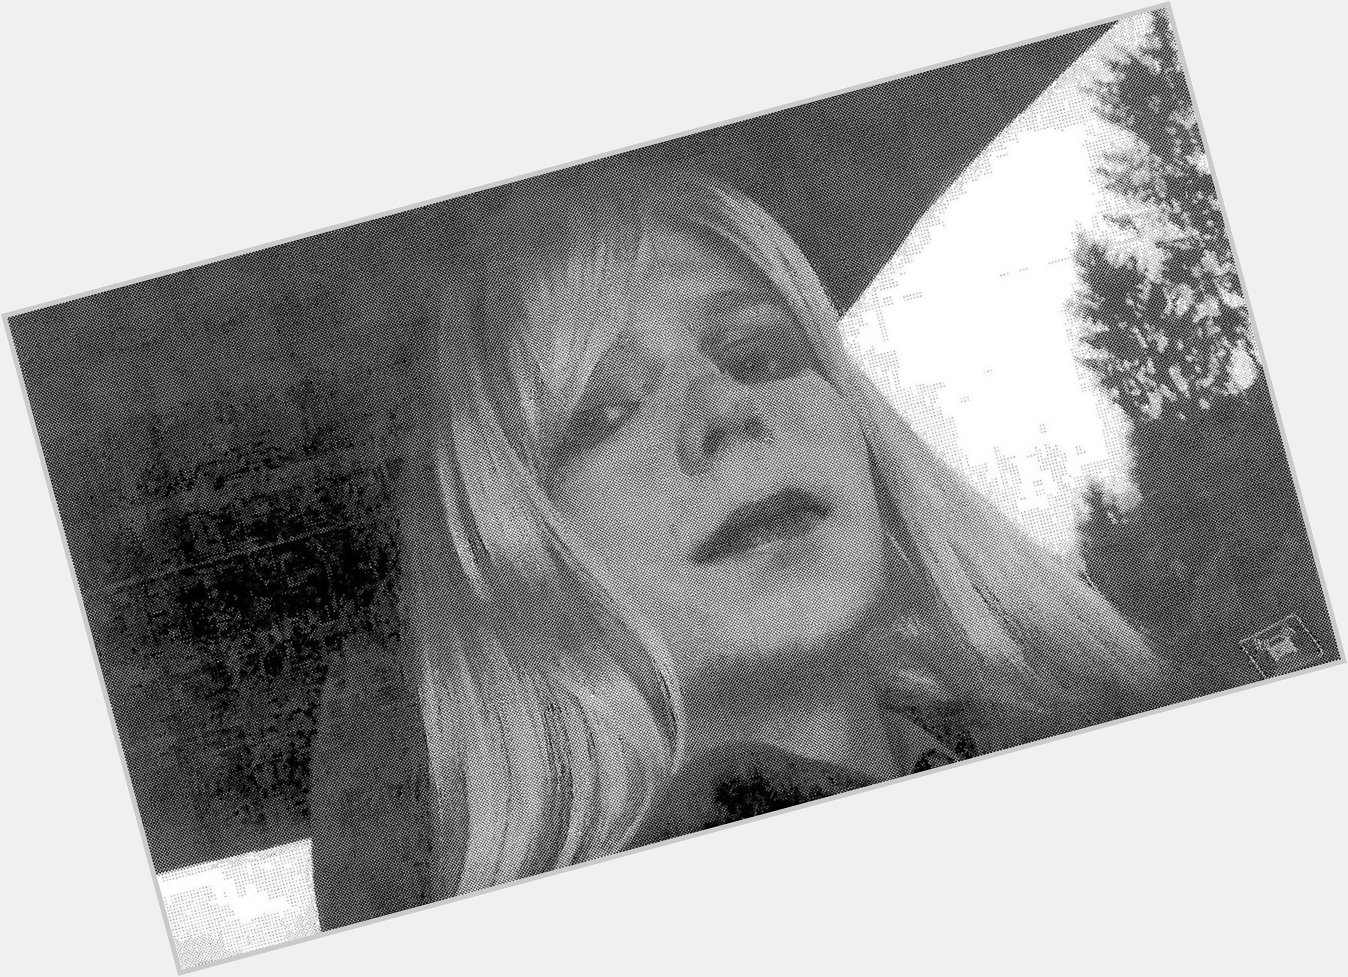 Ruairí McKiernan: Happy birthday Chelsea Manning and thank you  